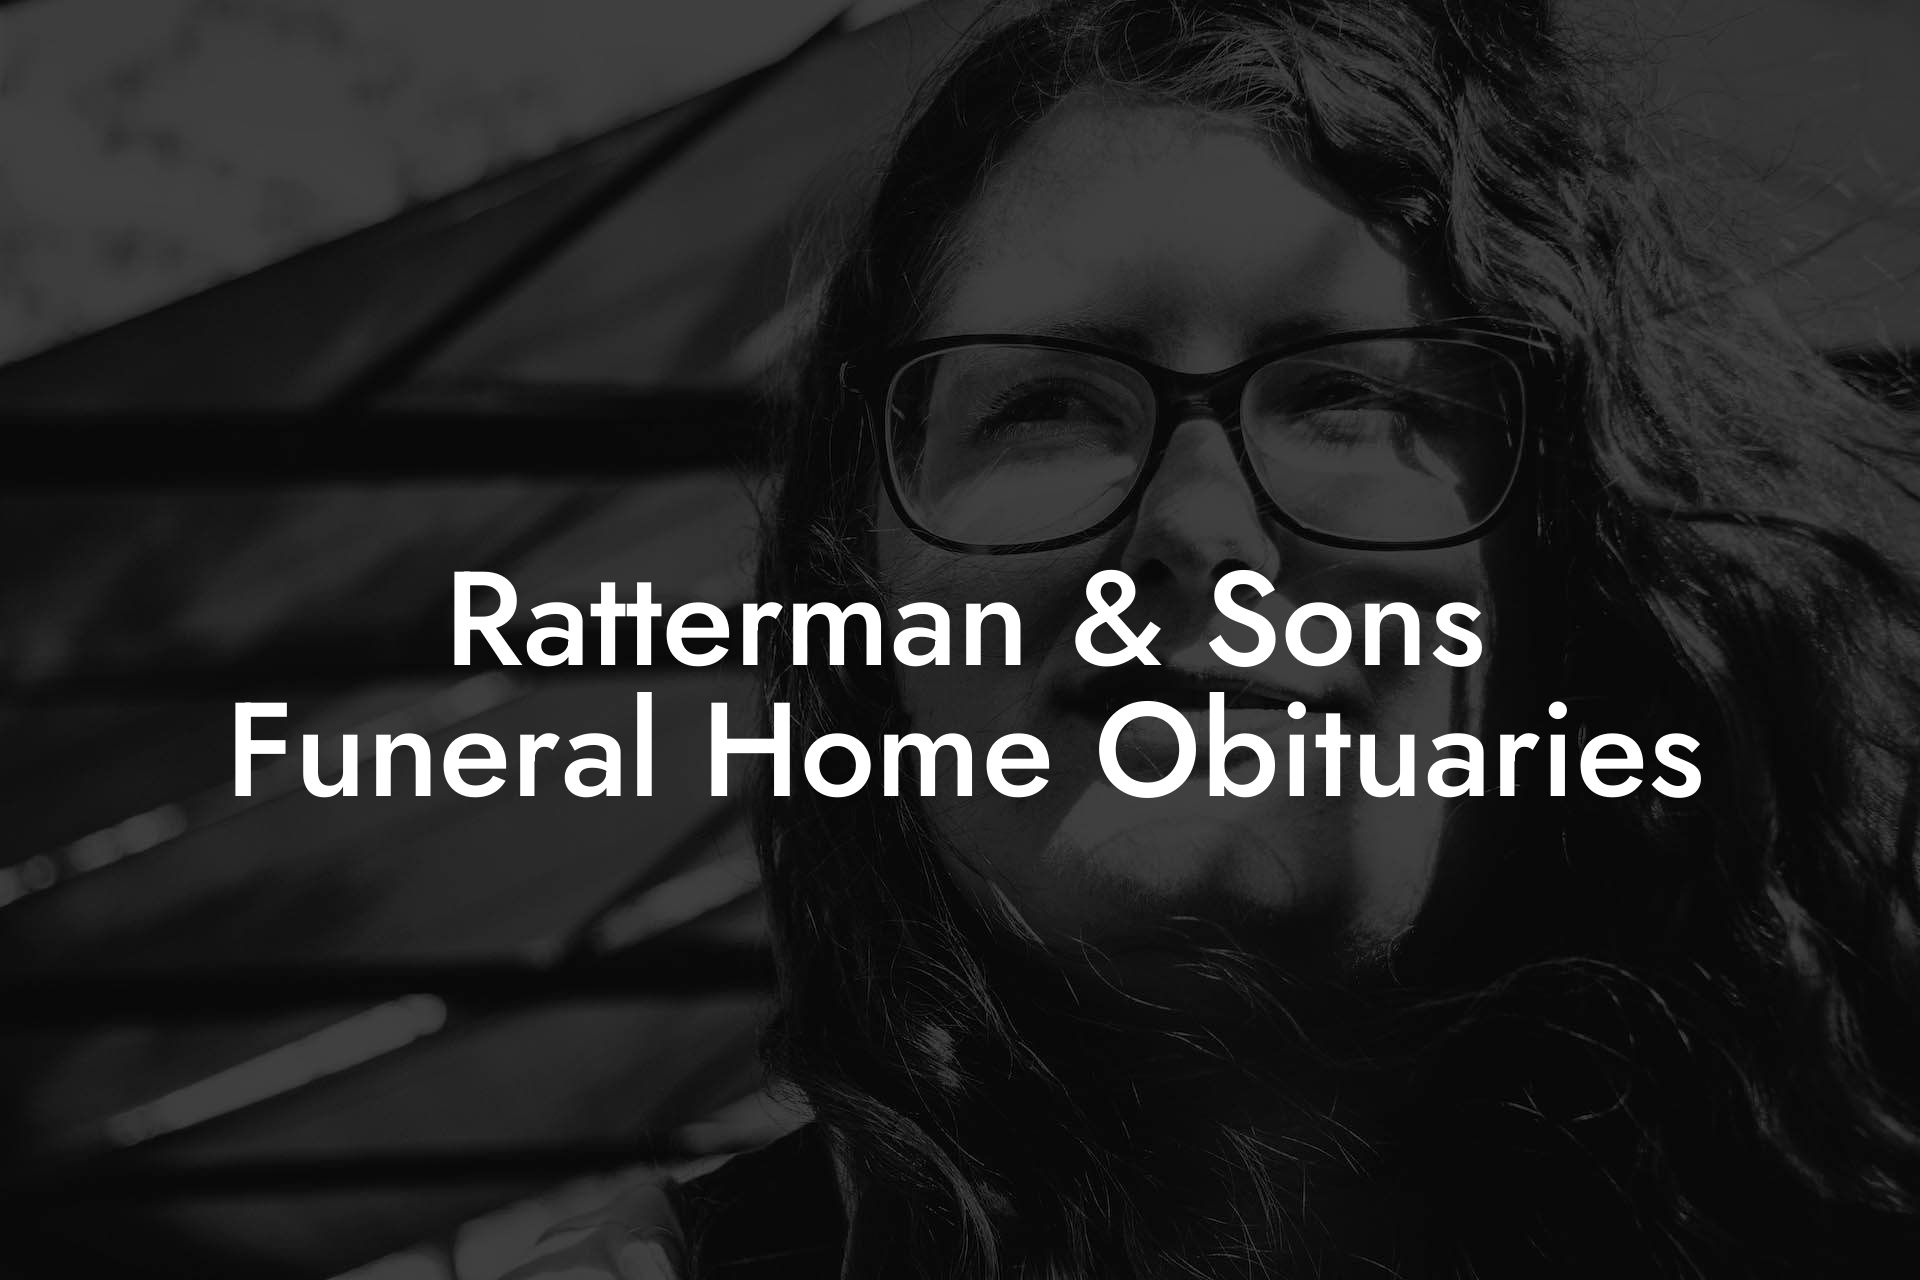 Ratterman & Sons Funeral Home Obituaries